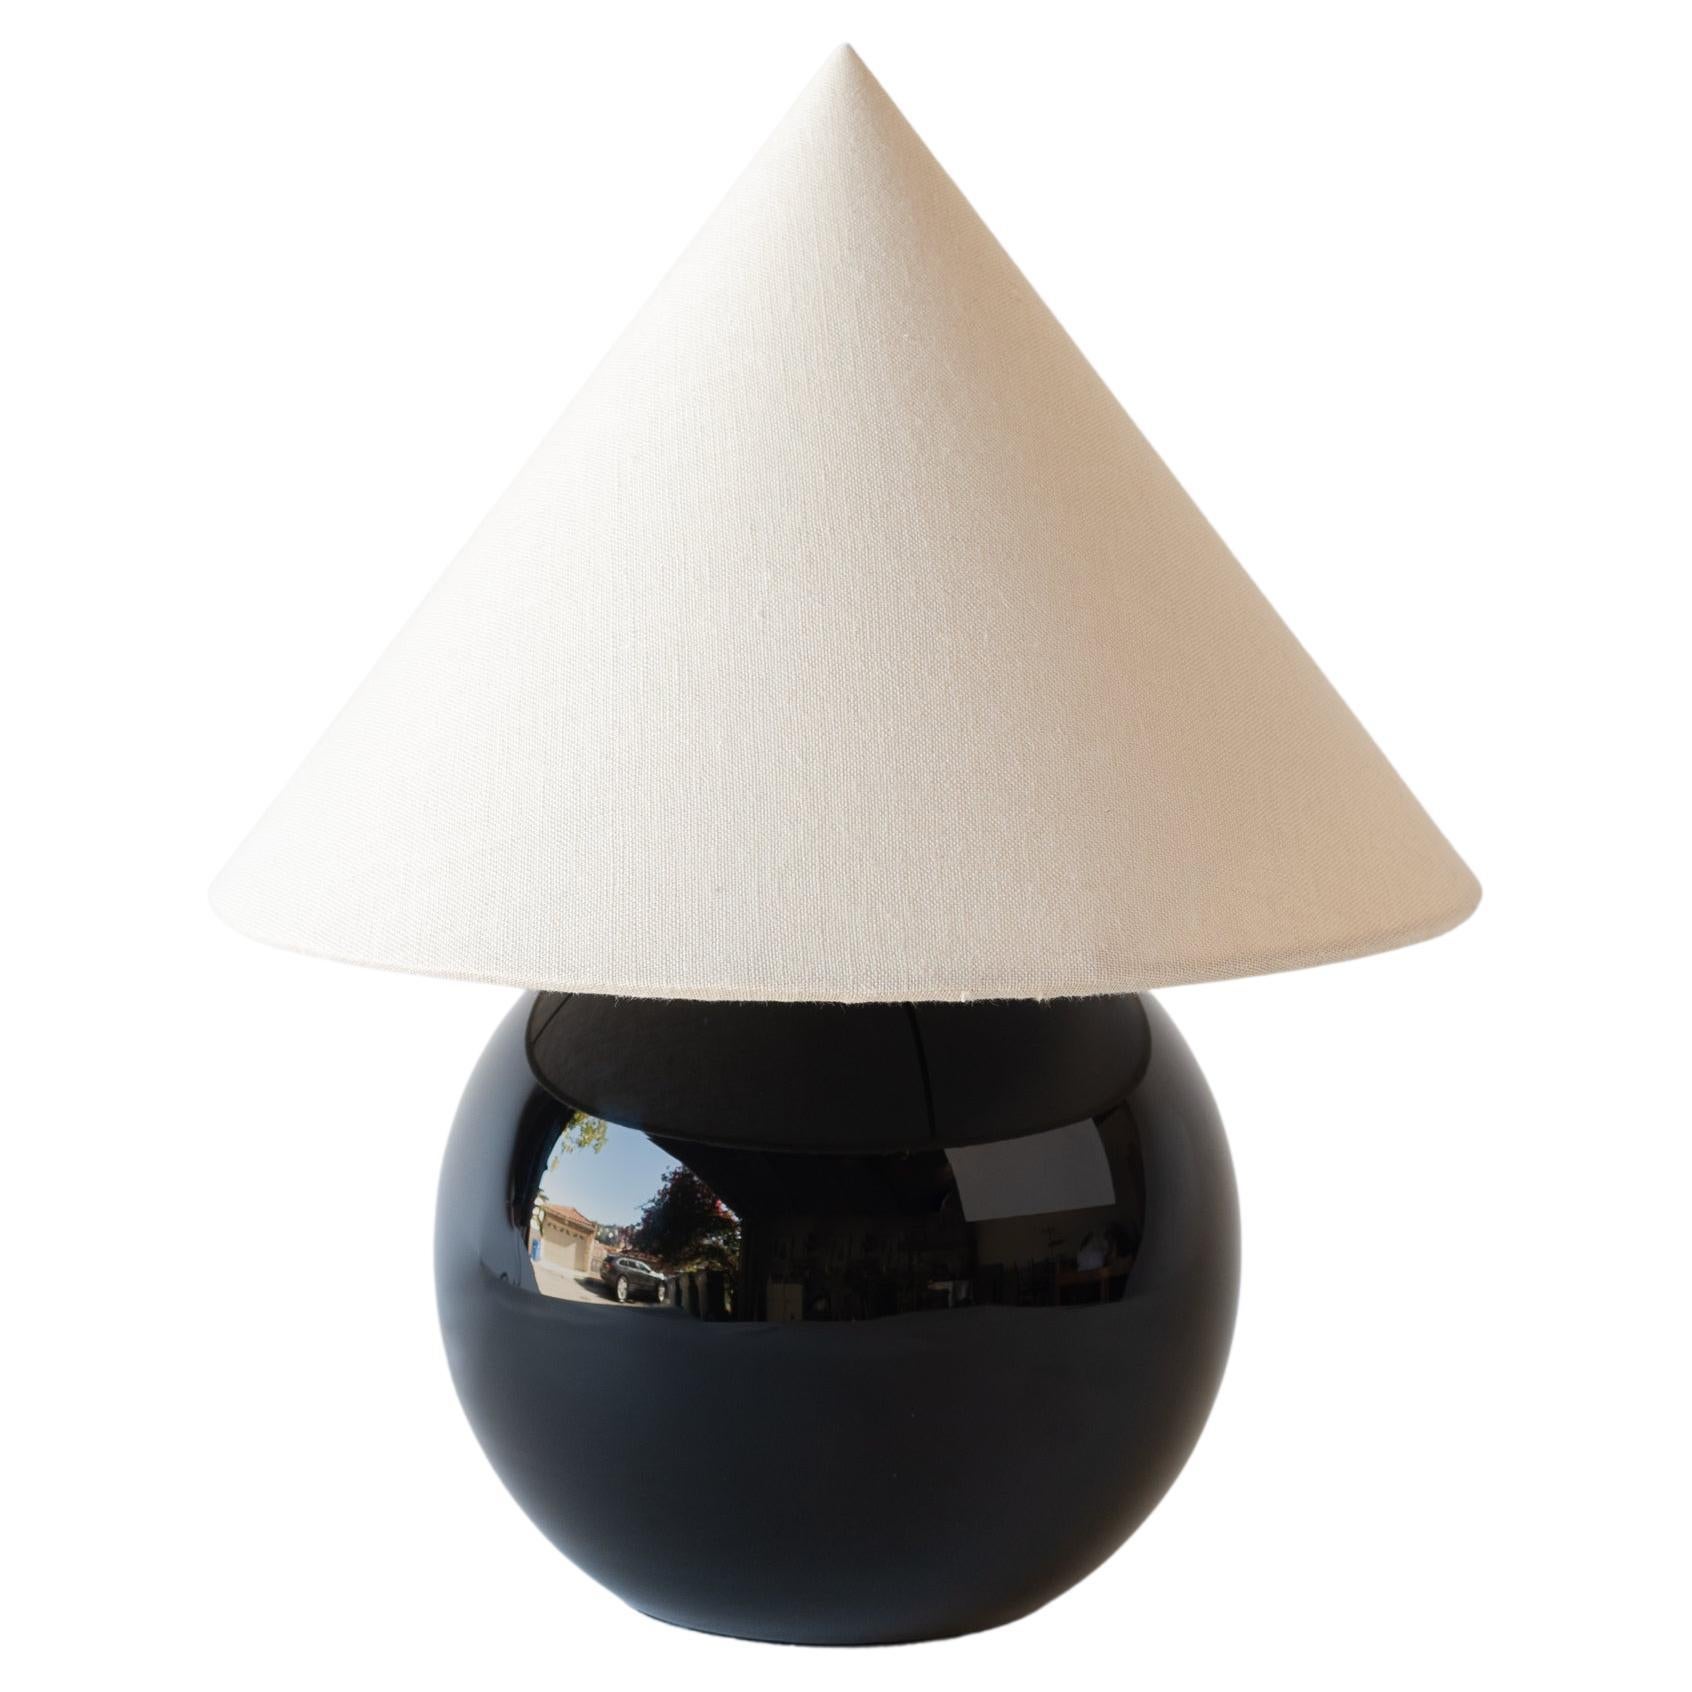 Jacques Adnet, Black Sphere Table Lamp, C. 1940